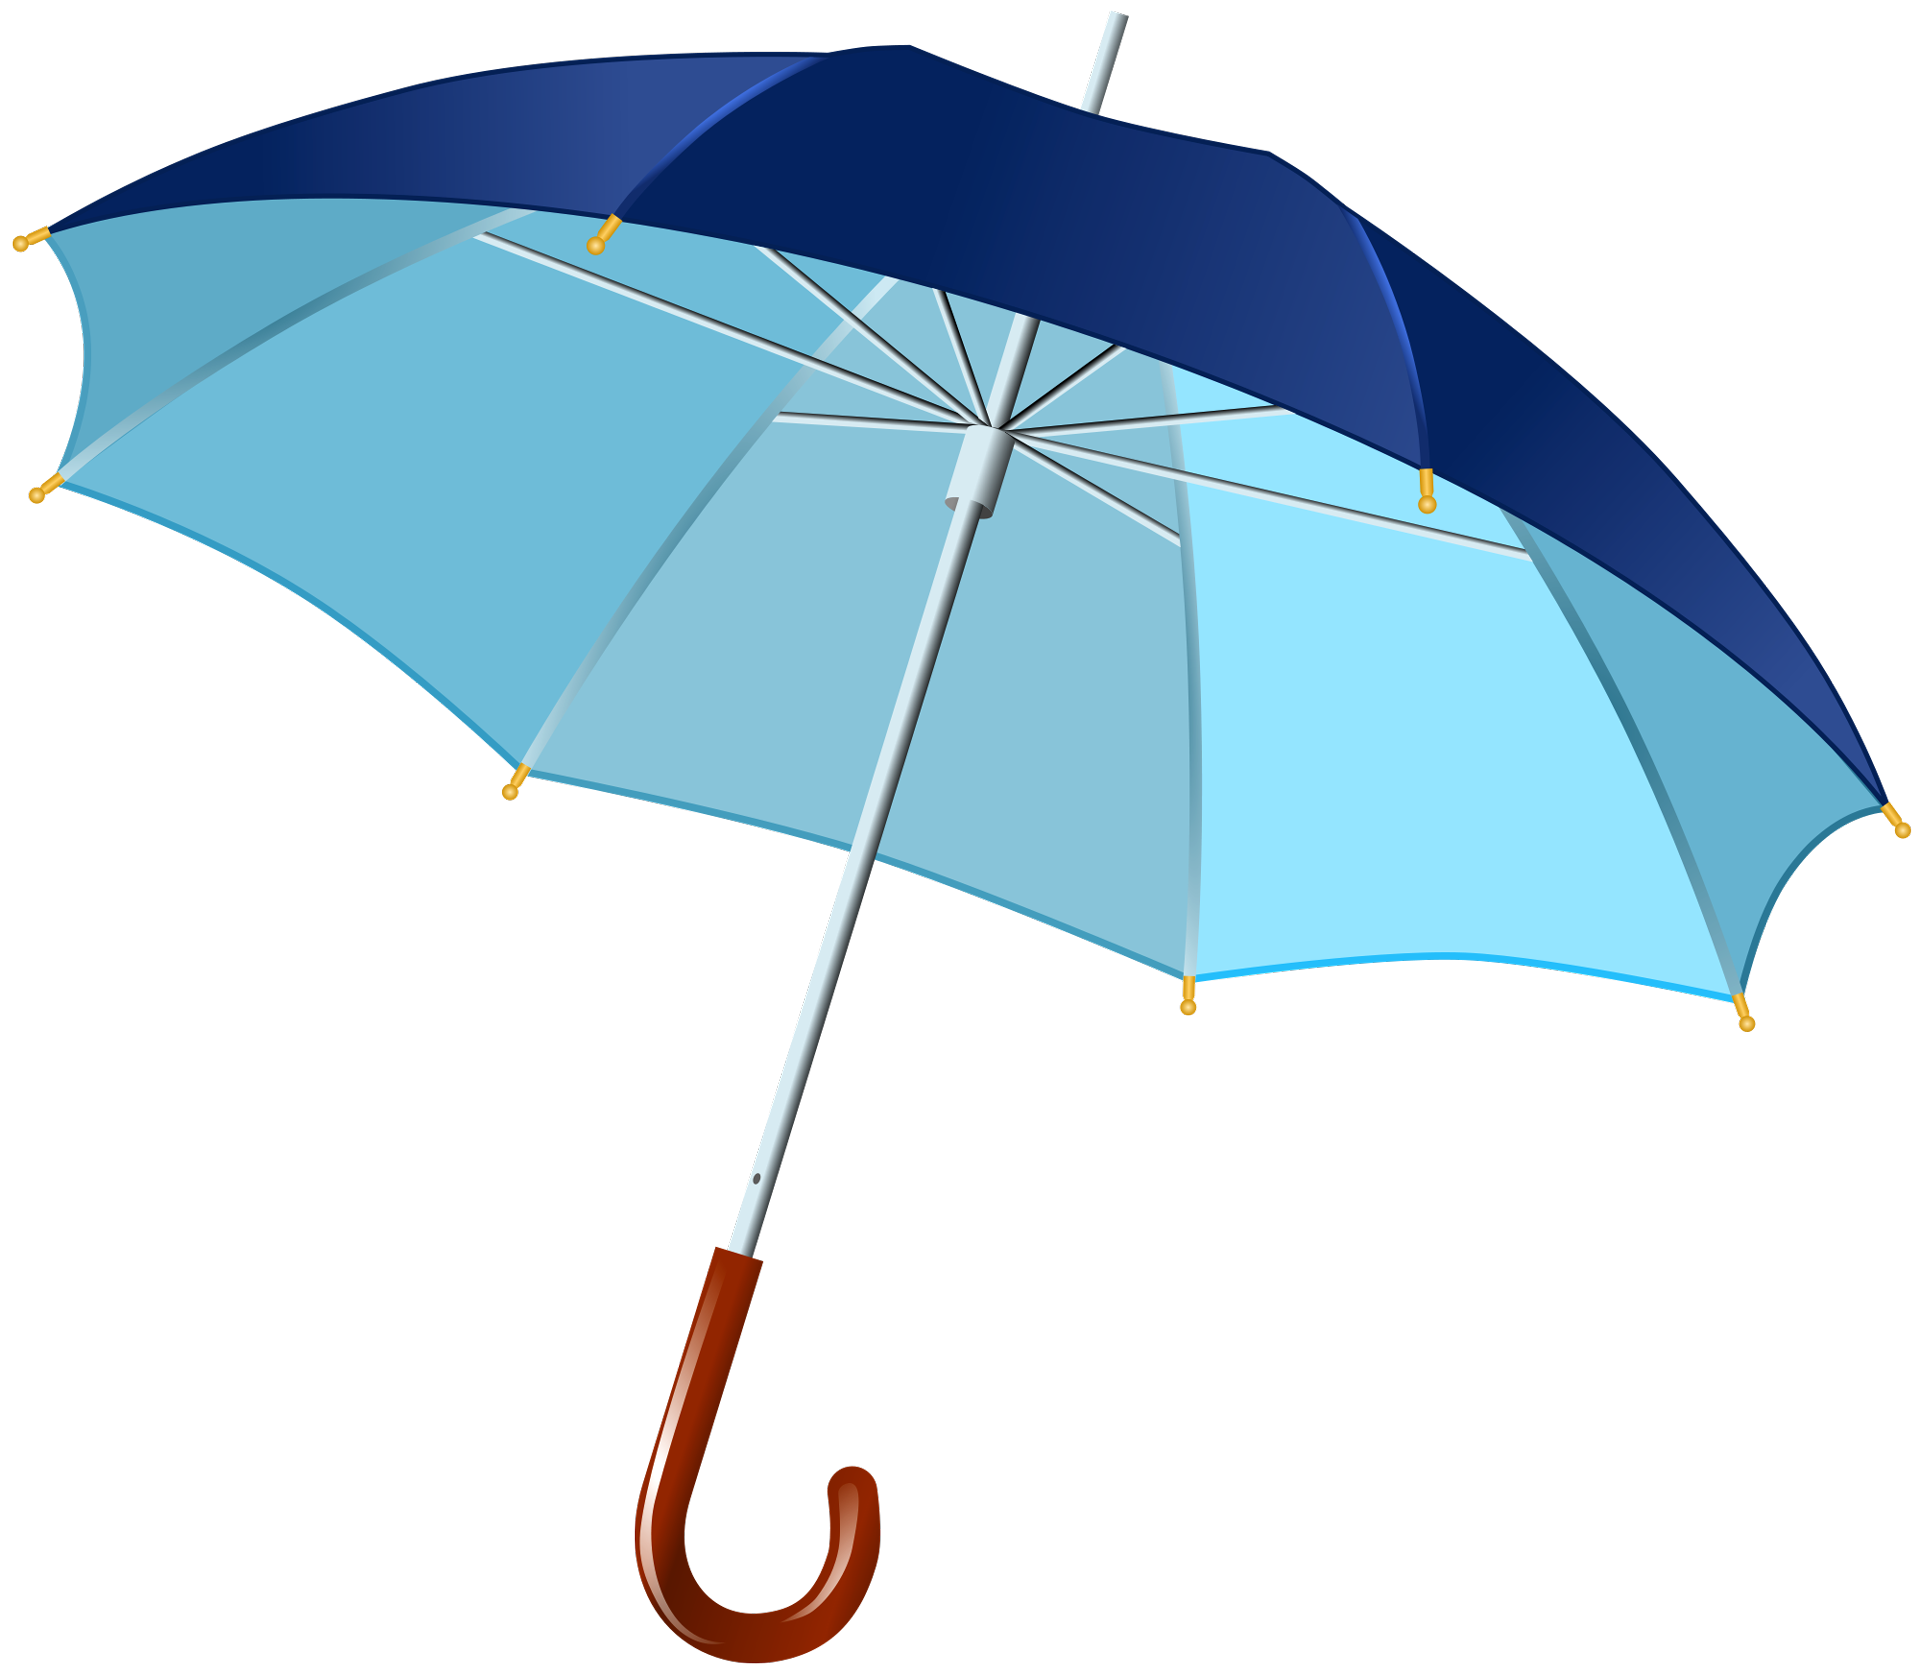 A Blue Umbrella With A Wooden Handle